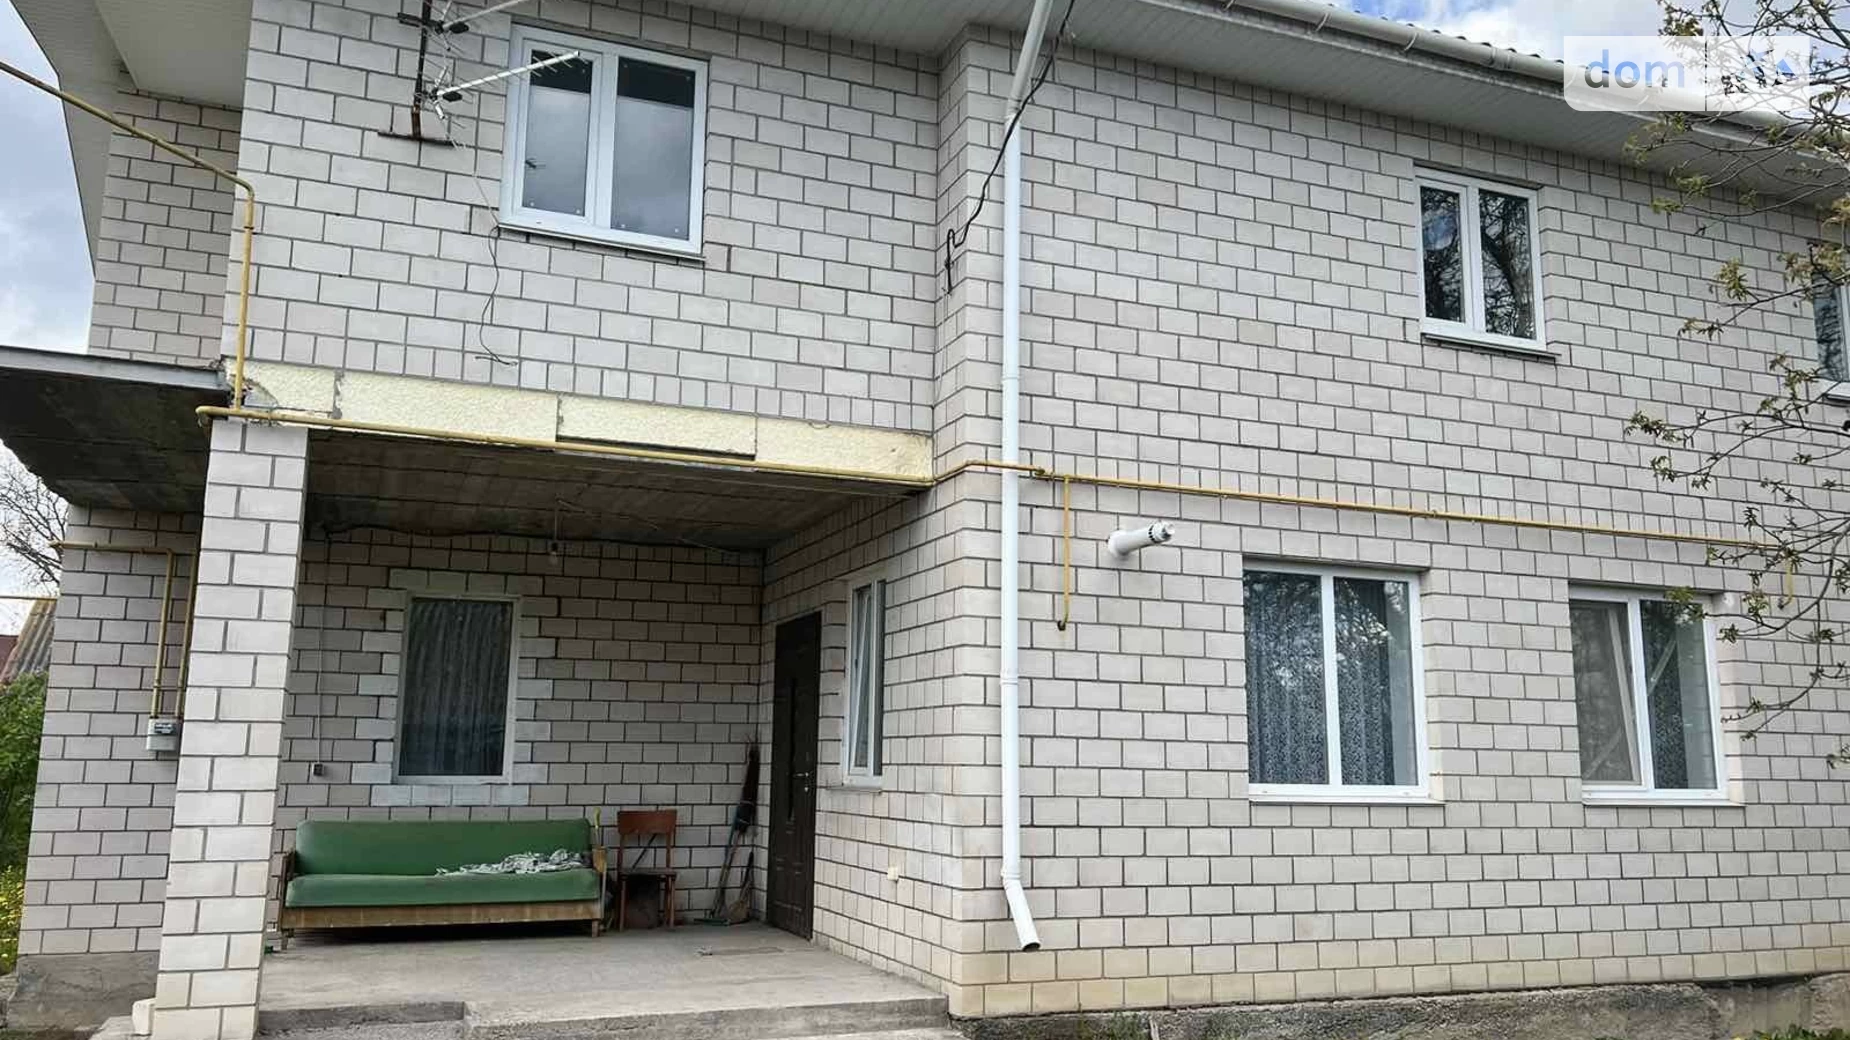 Продается дом на 2 этажа 85 кв. м с мансардой, ул. Ярослава Мудрого